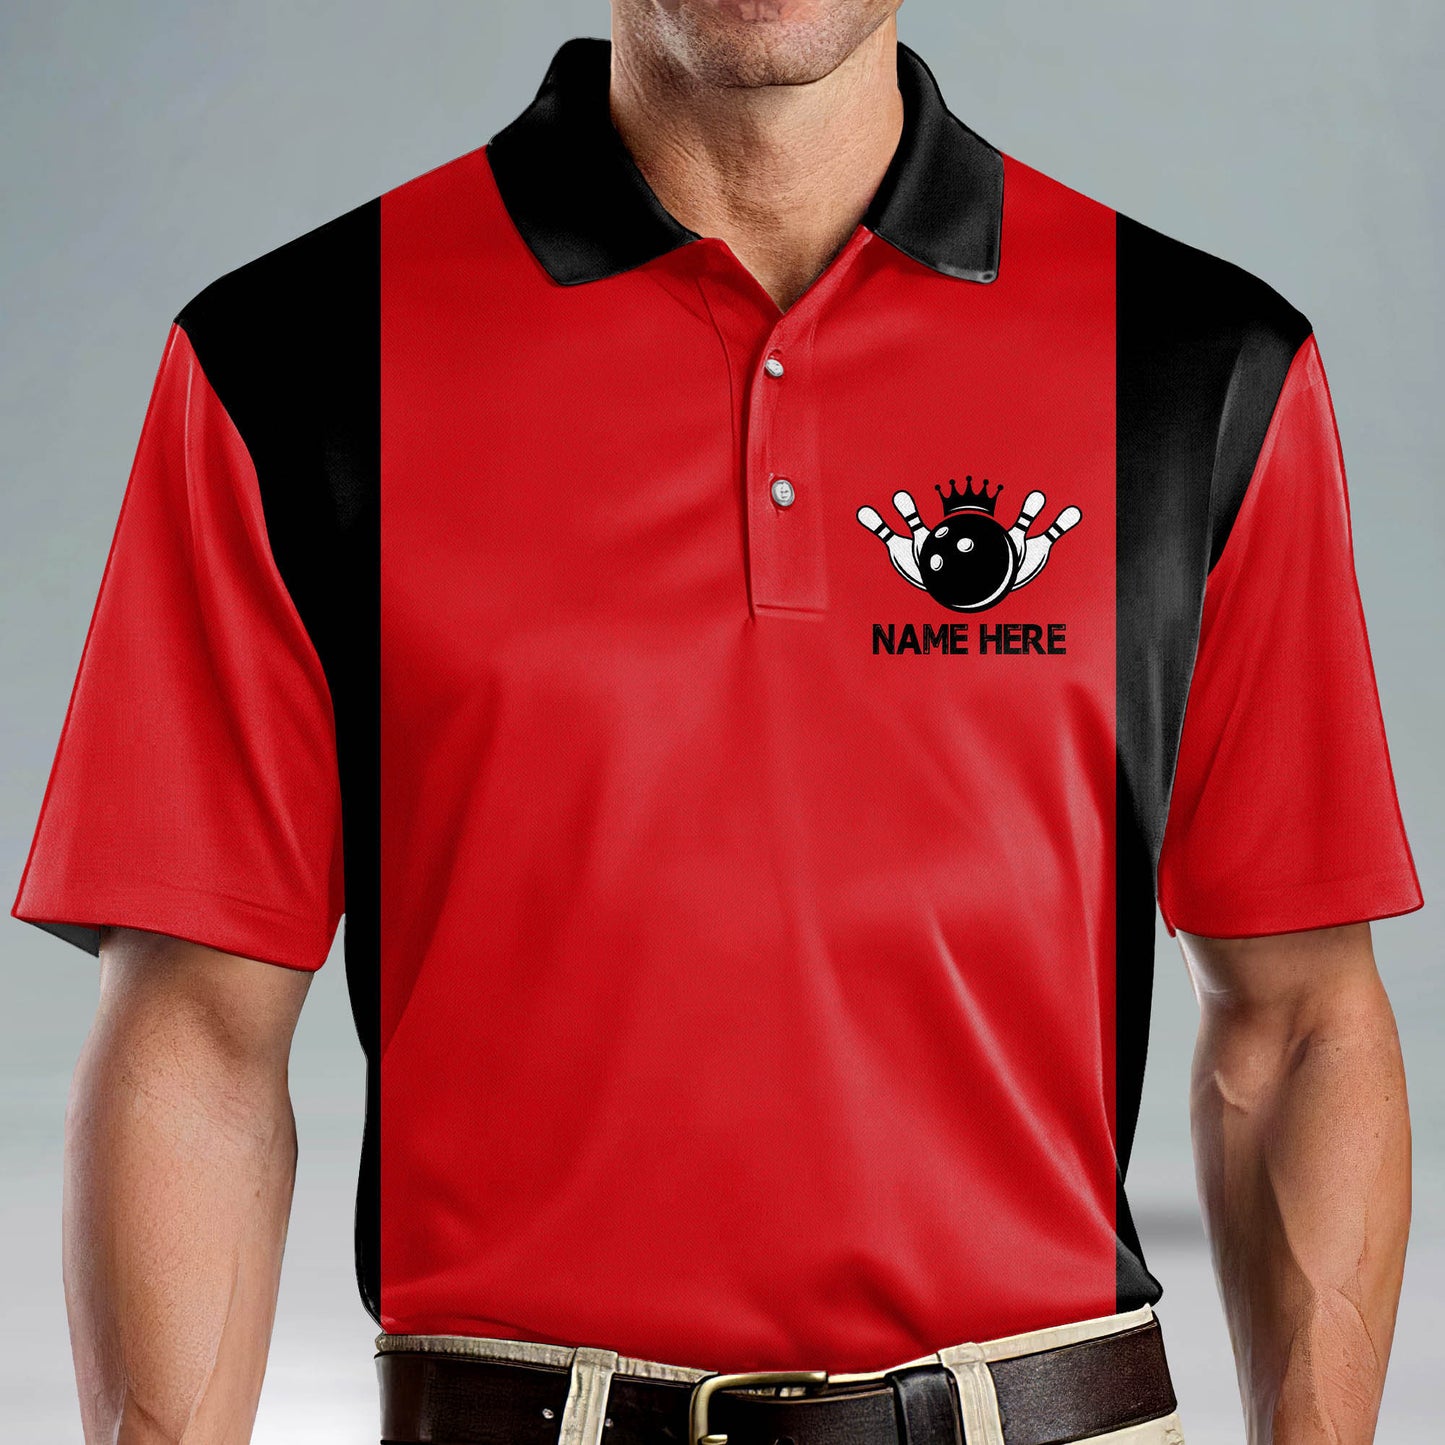 Custom Bowling Shirts For Men - Bowling Shirts Retro - Personalized Men's Funny Bowling Shirts - Black And Red Short Sleeve Bowling Polo Shirts Mens BM0100